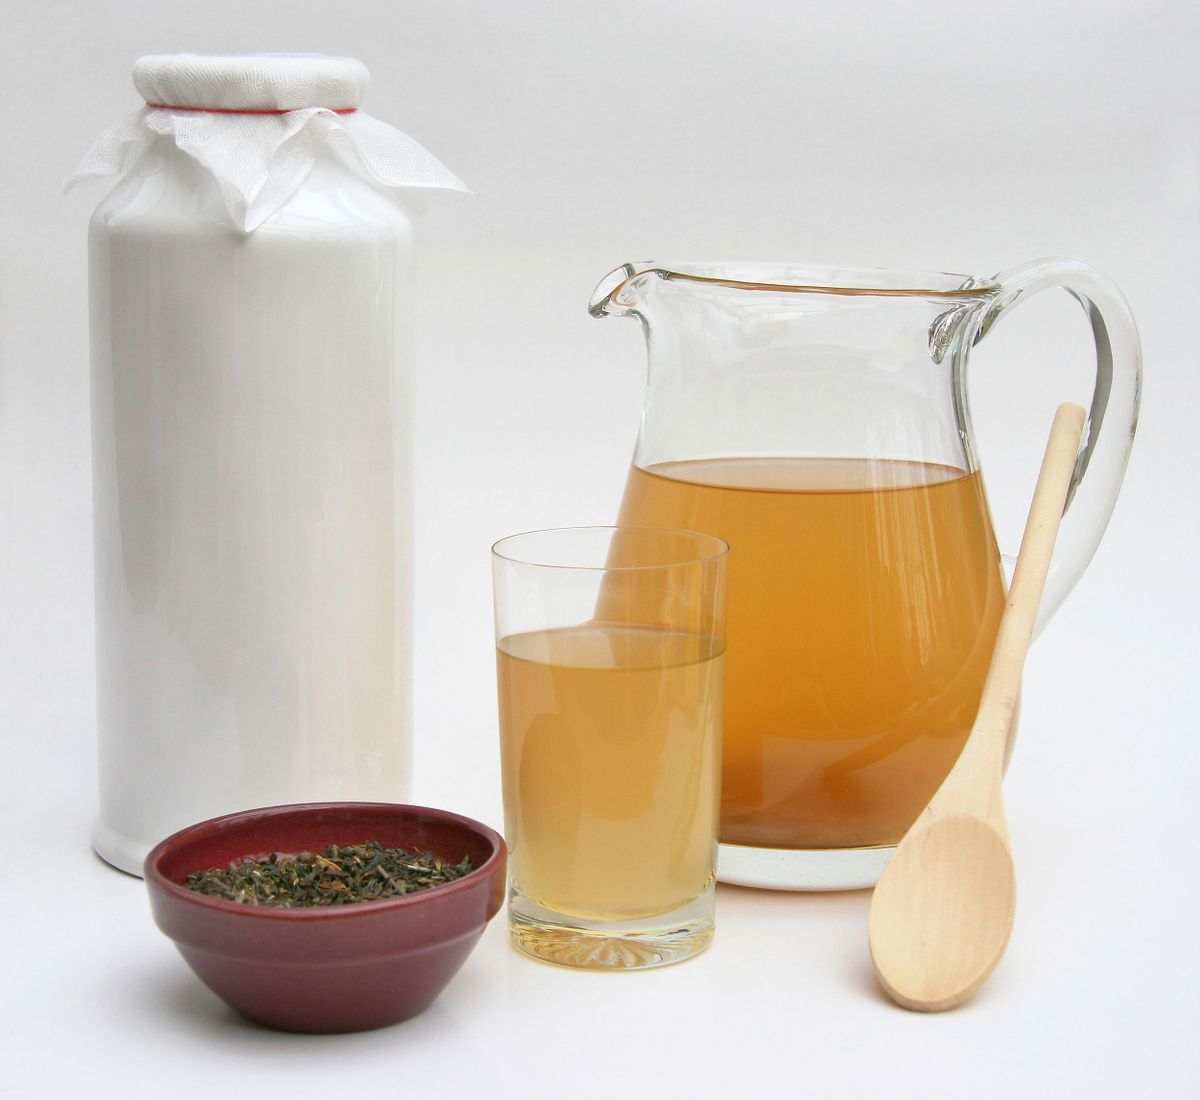 Is homemade kombucha safe to drink? | HowStuffWorks